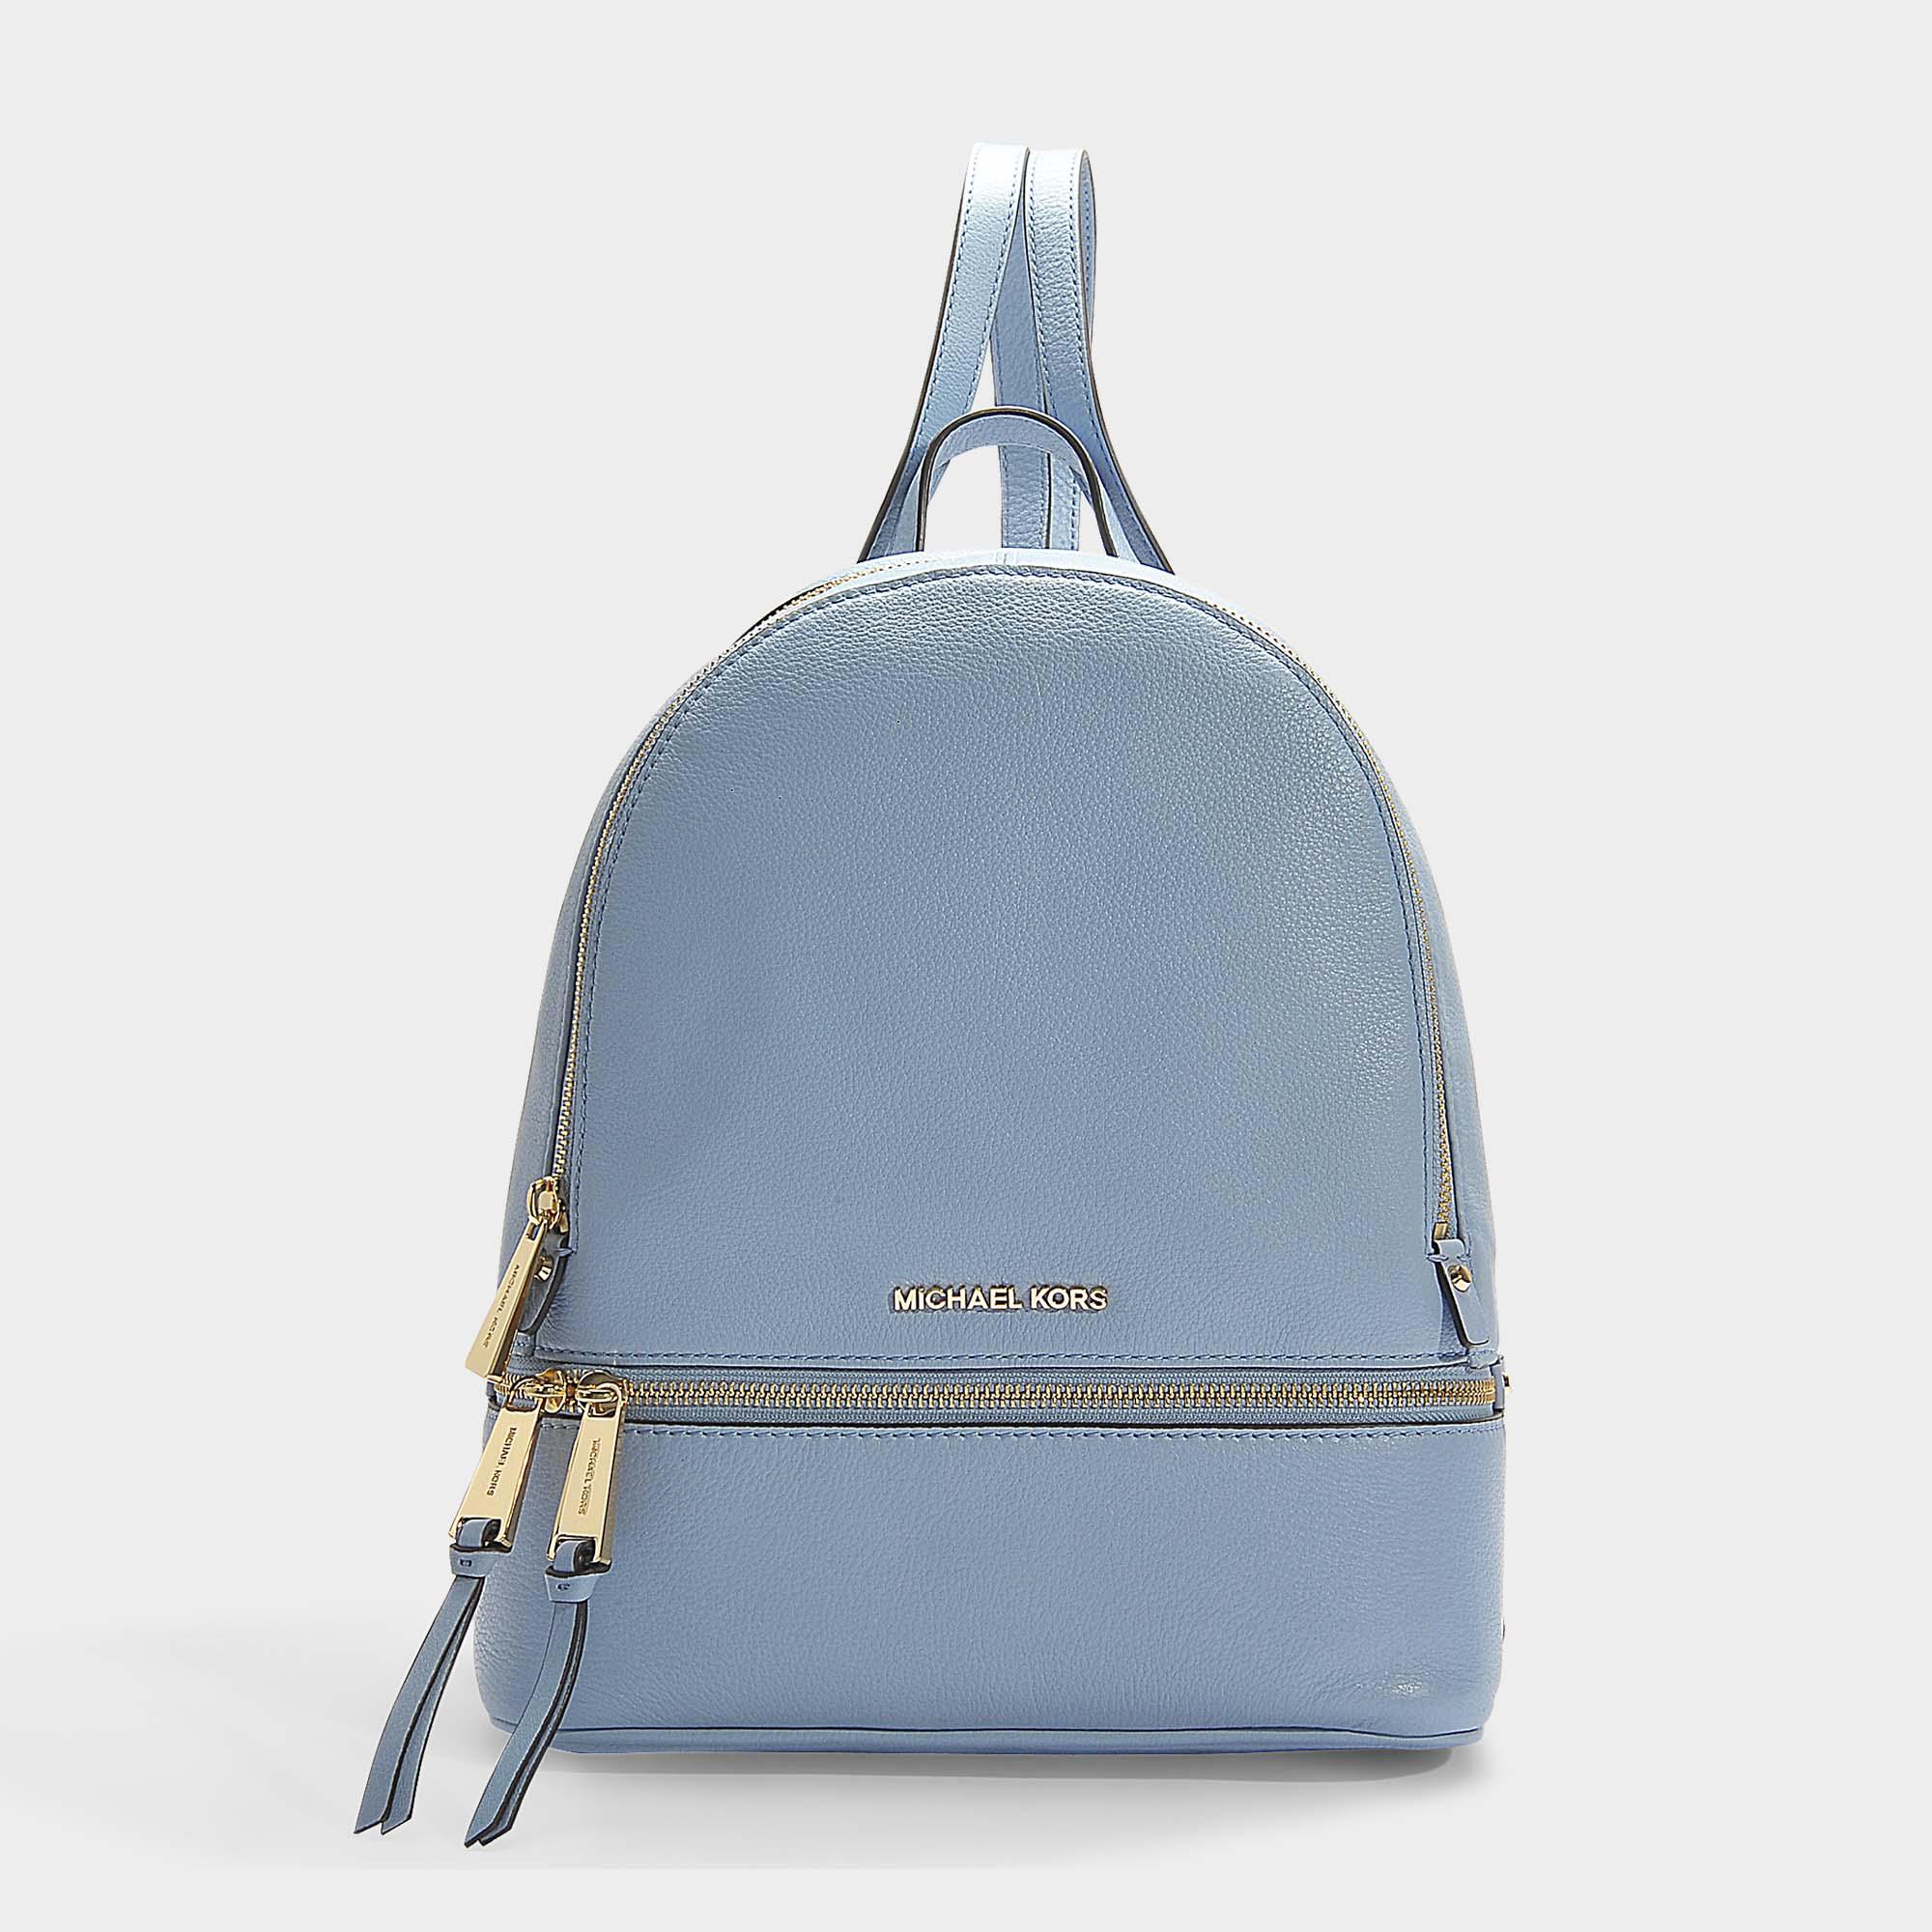 michael kors baby blue backpack